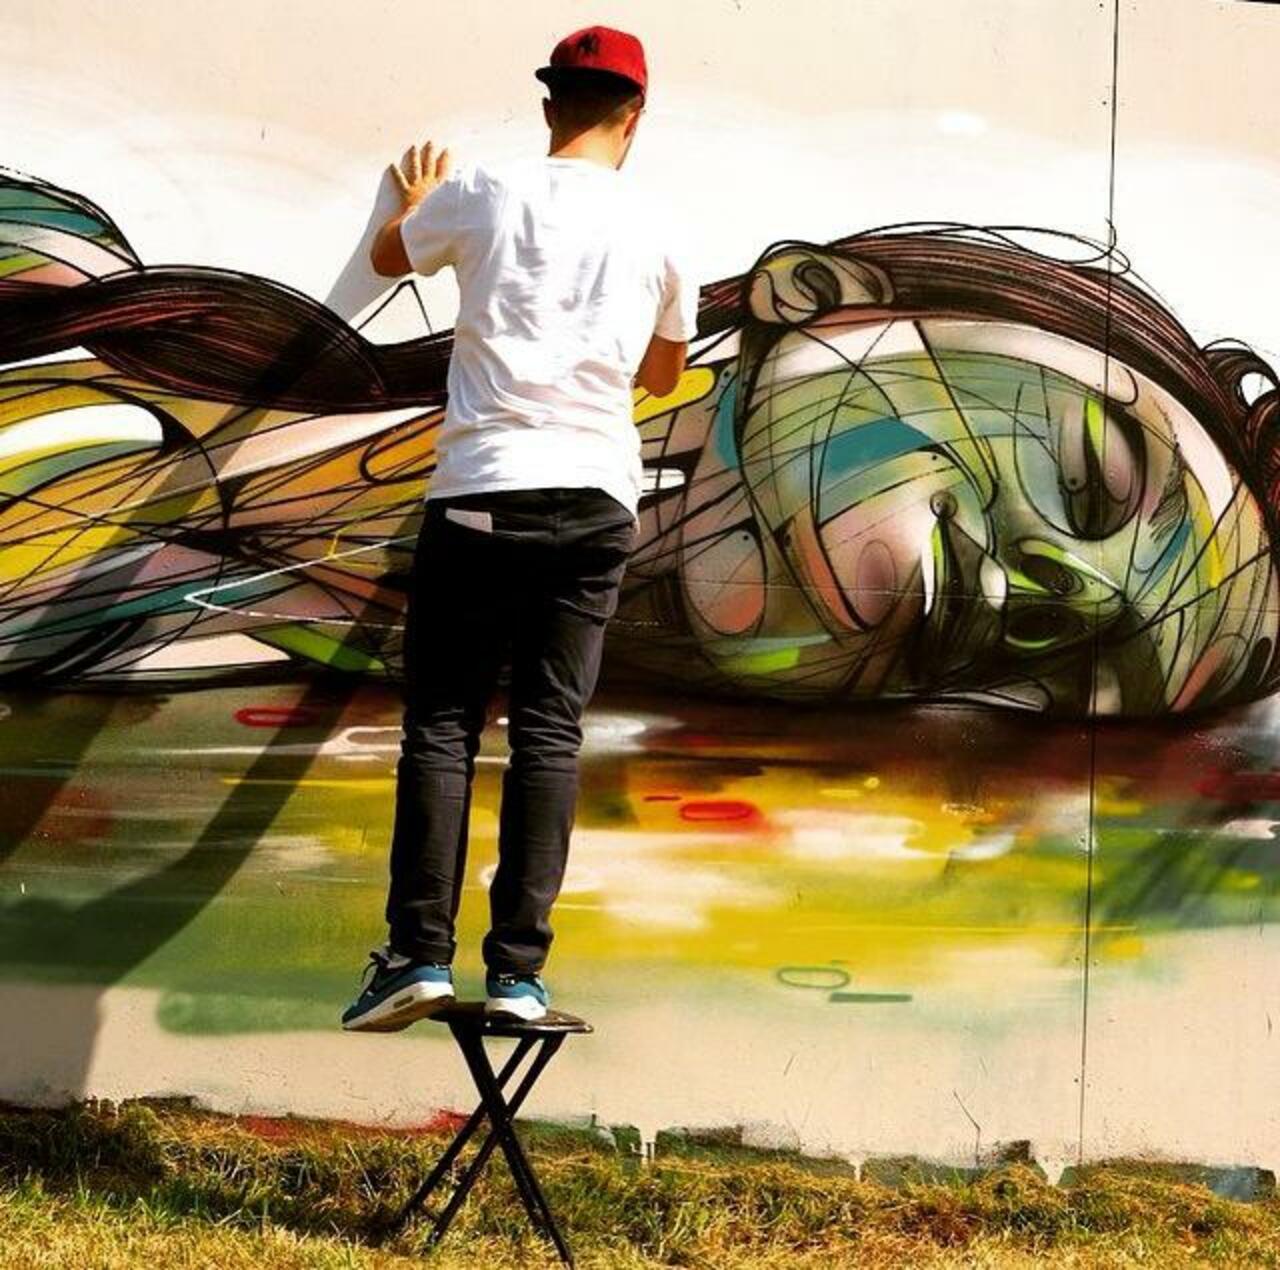 Street Art by the artist • Hopare 

#art #arte #graffiti #streetart http://t.co/t0Azmc7IJV